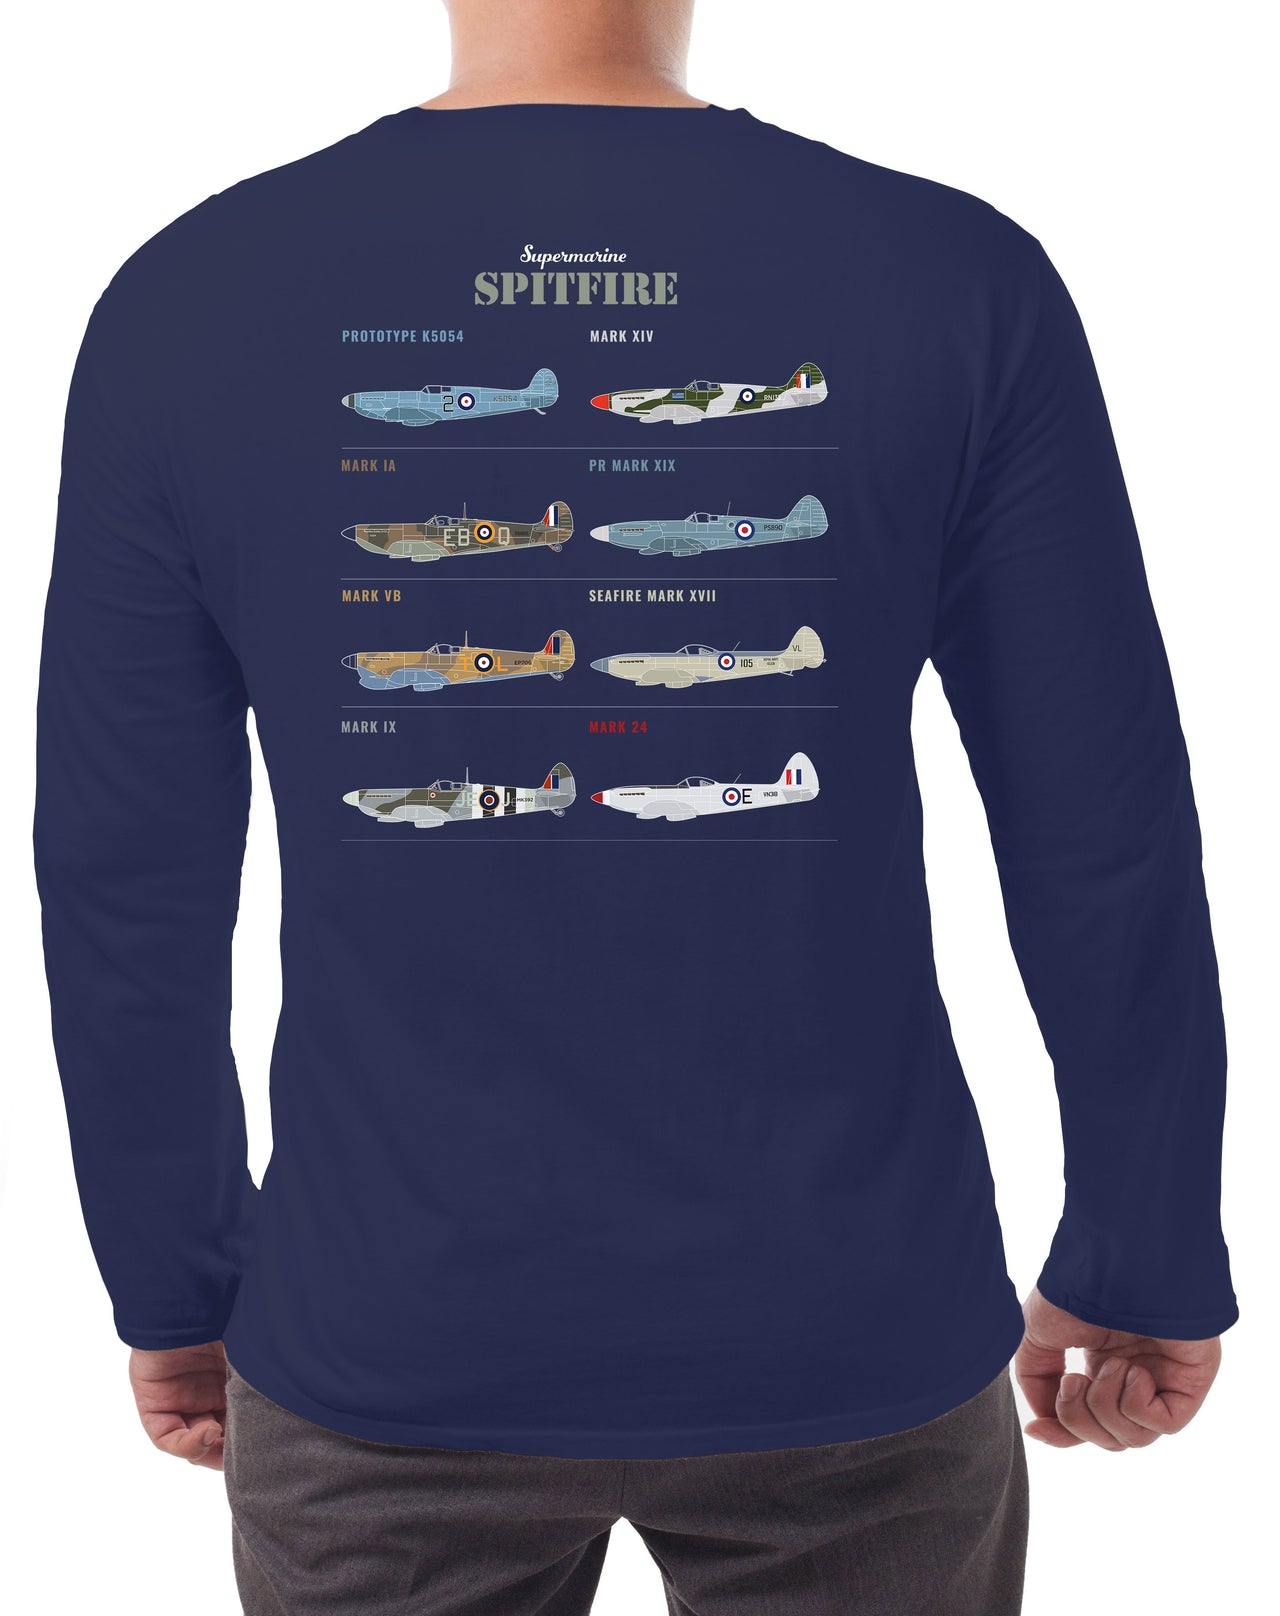 Spitfire MK VB - Long-sleeve T-shirt